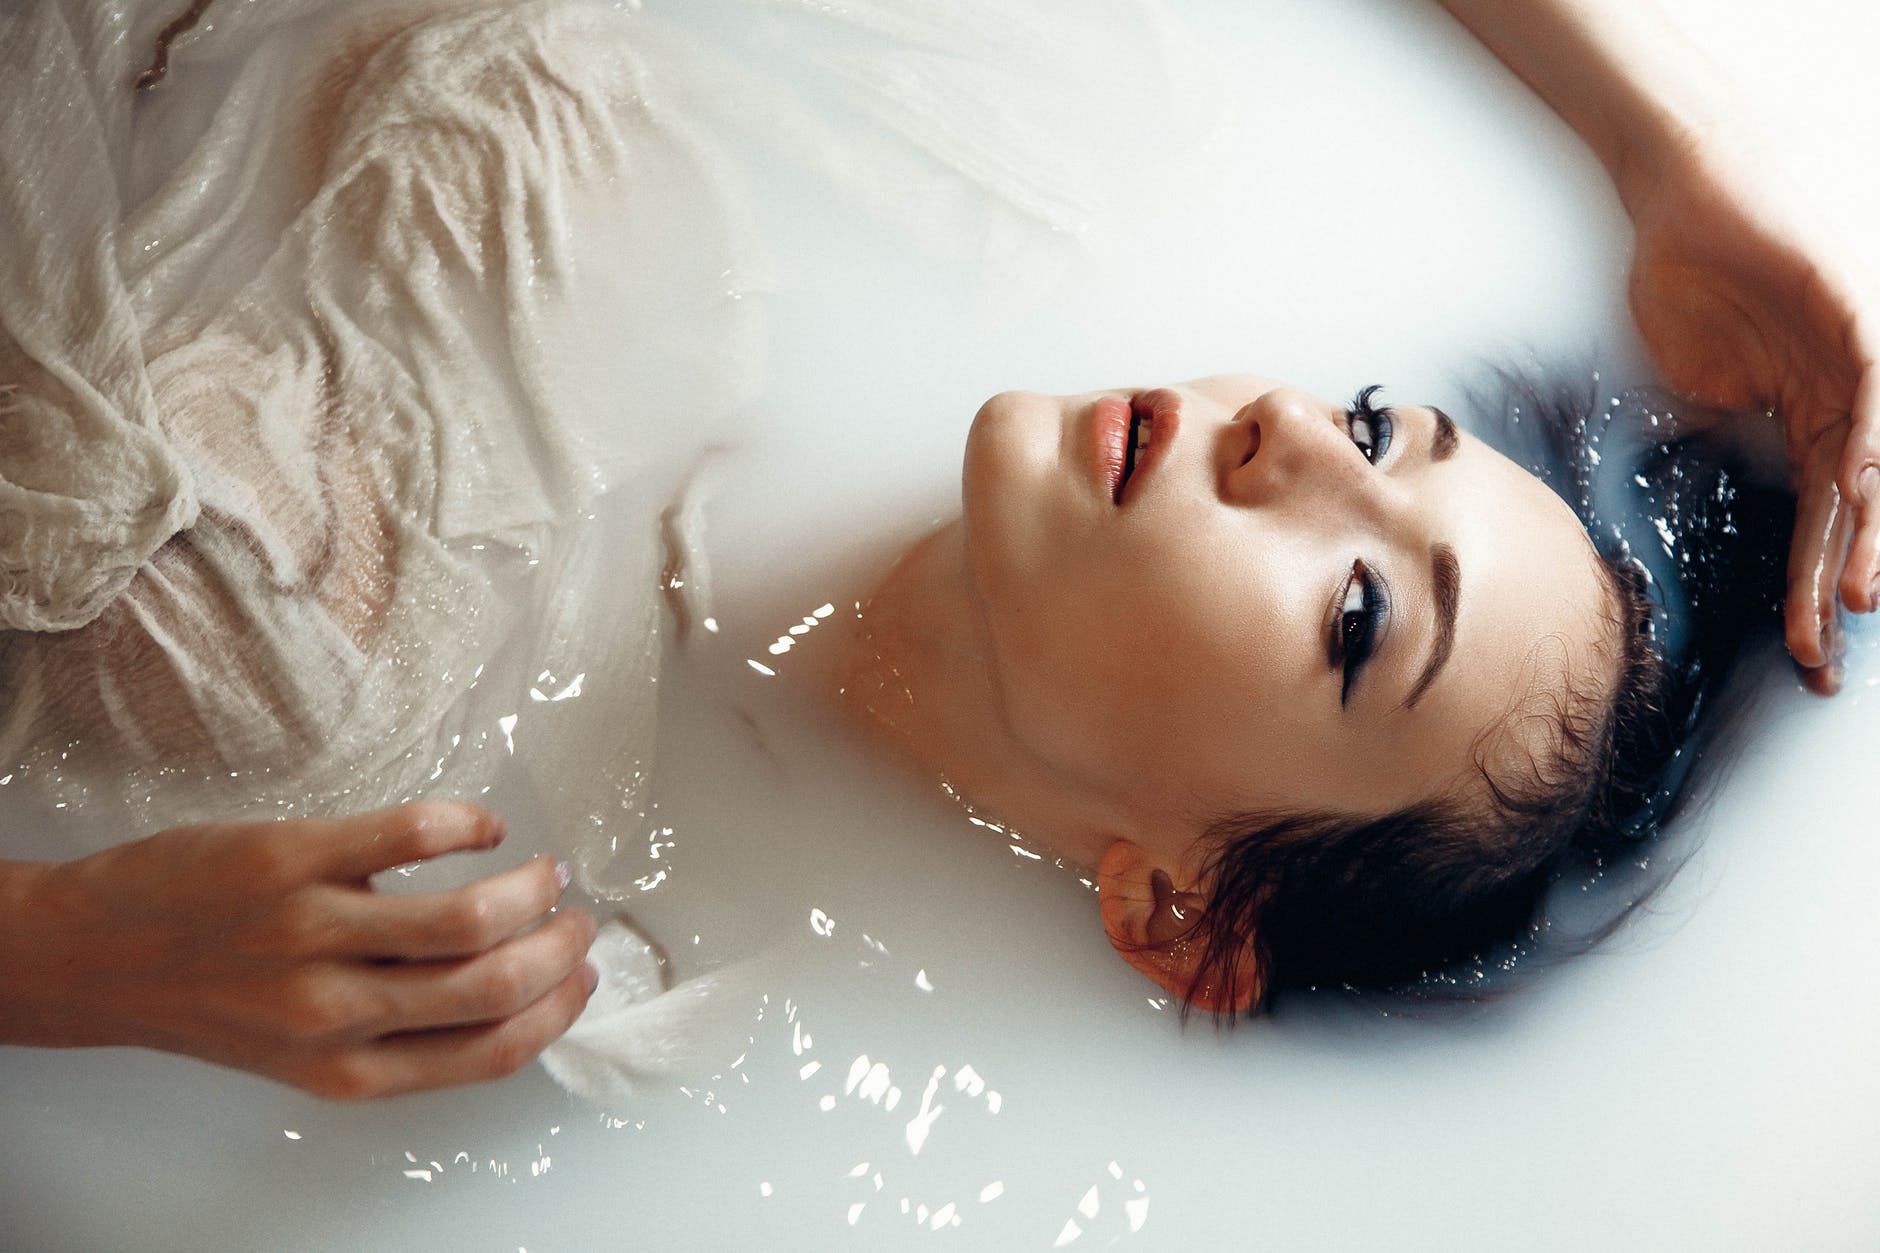 Relaxing bath | Source: Pexels